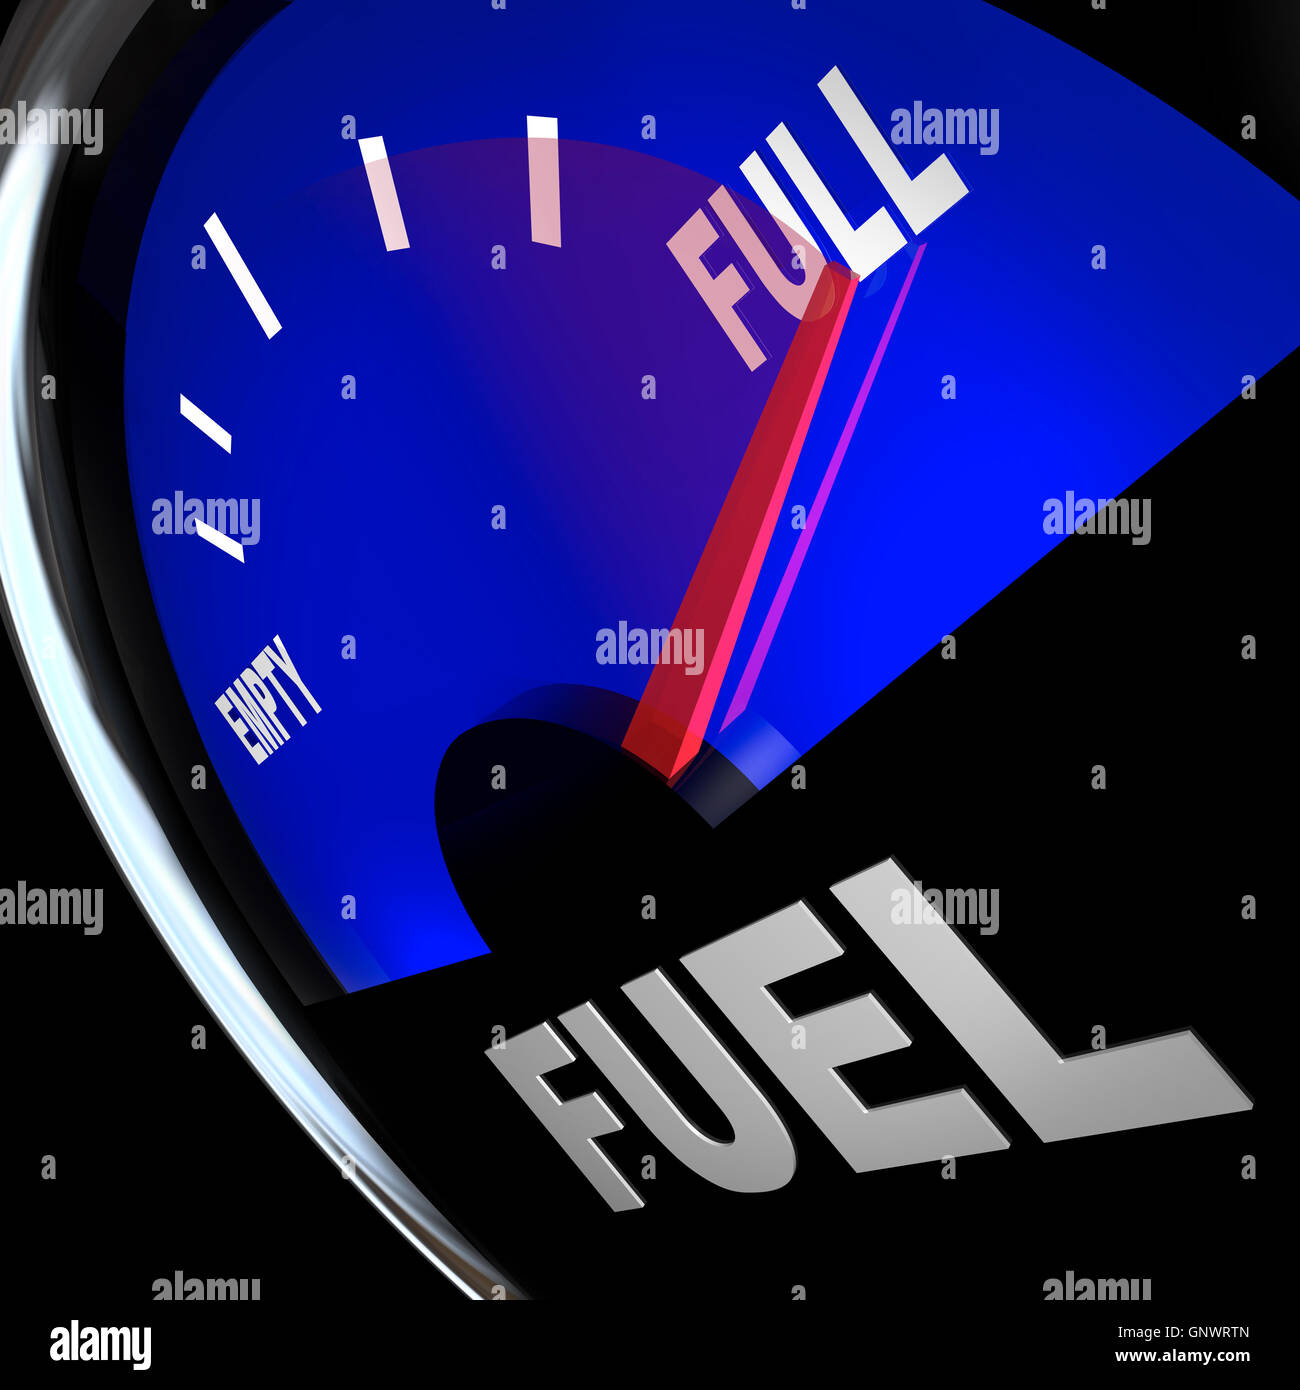 https://c8.alamy.com/comp/GNWRTN/fuel-gauge-needle-points-to-full-gas-tank-GNWRTN.jpg